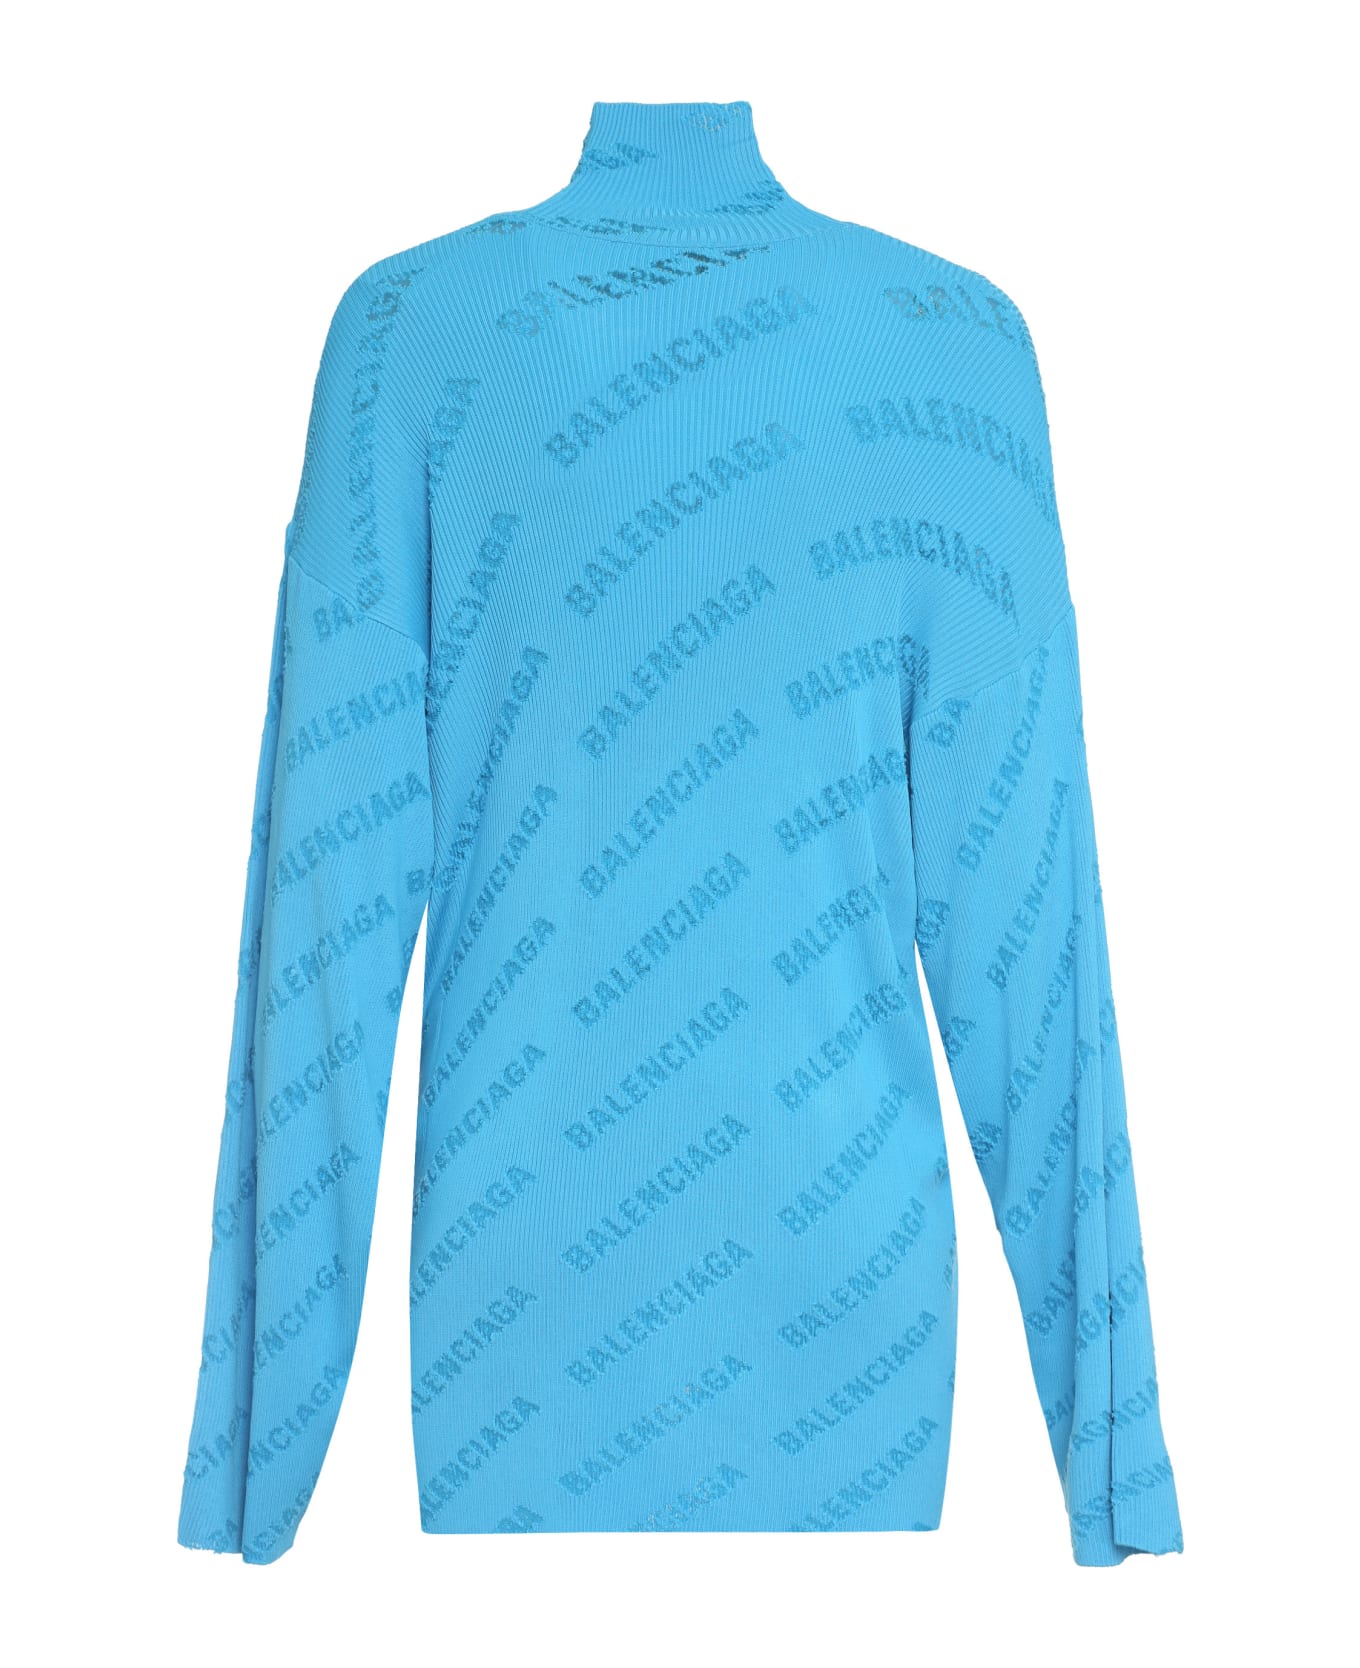 Balenciaga Turtleneck Sweater - Light Blue